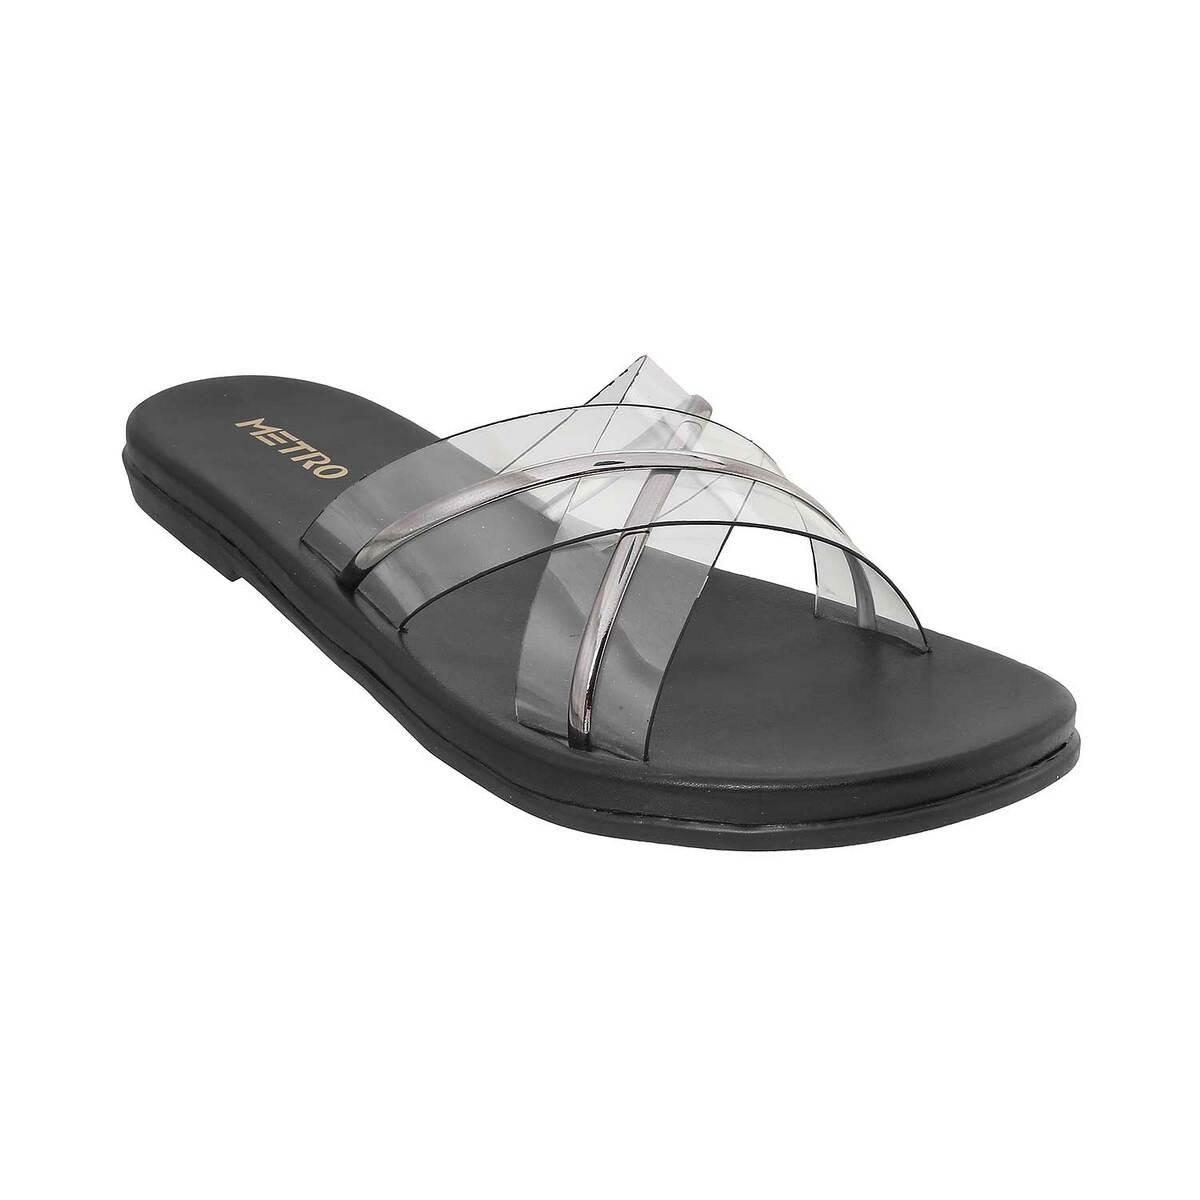 Buy Women Blue Casual Sandals Online | SKU: 33-1437-45-36-Metro Shoes